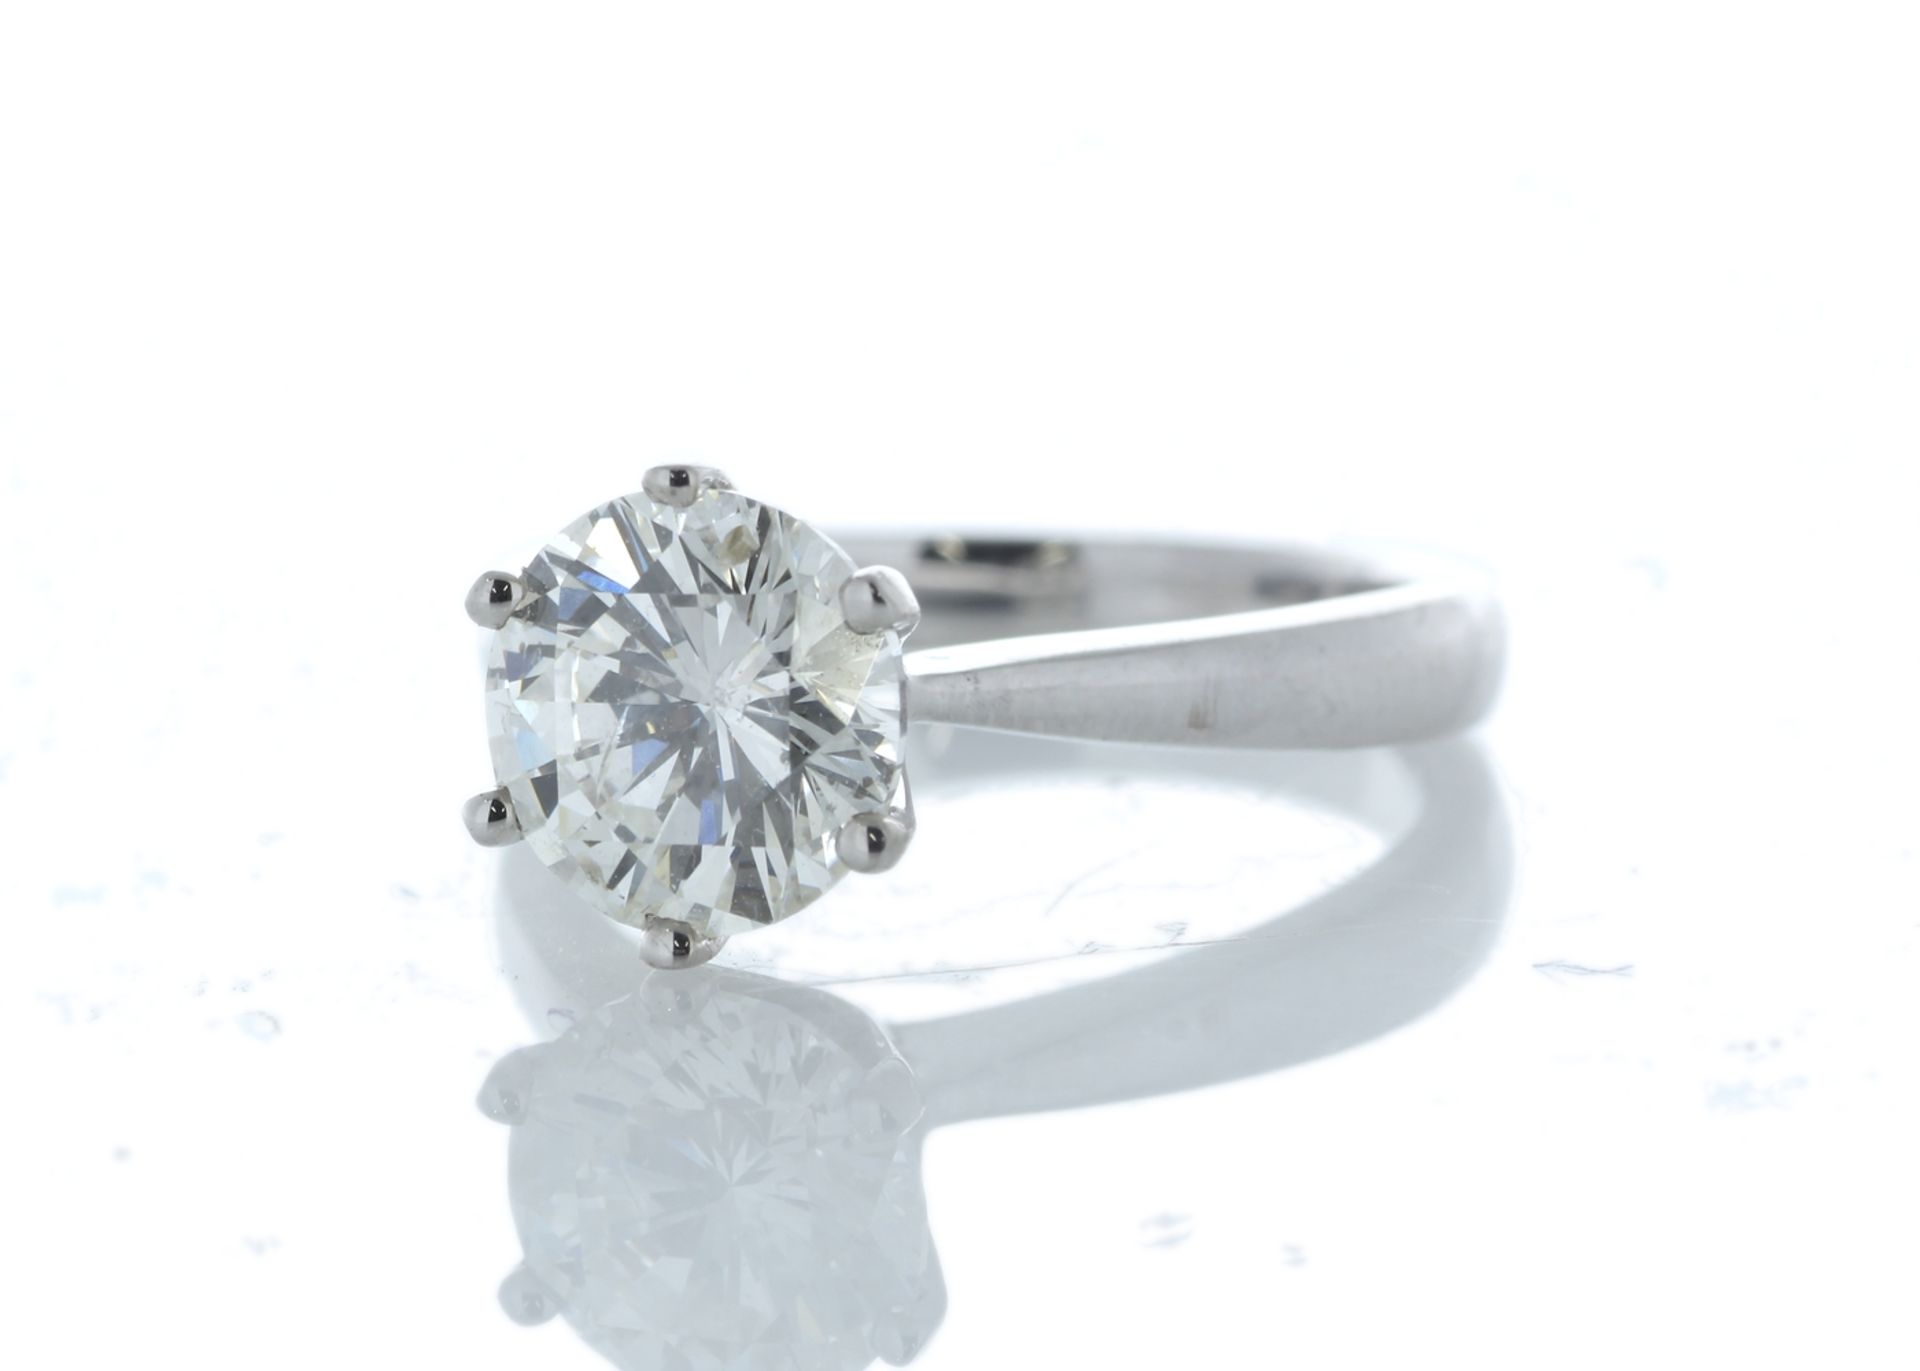 18ct White Gold Single Stone Prong Set Diamond Ring 2.35 Carats - Valued by IDI £59,503.00 - 18ct - Image 2 of 5